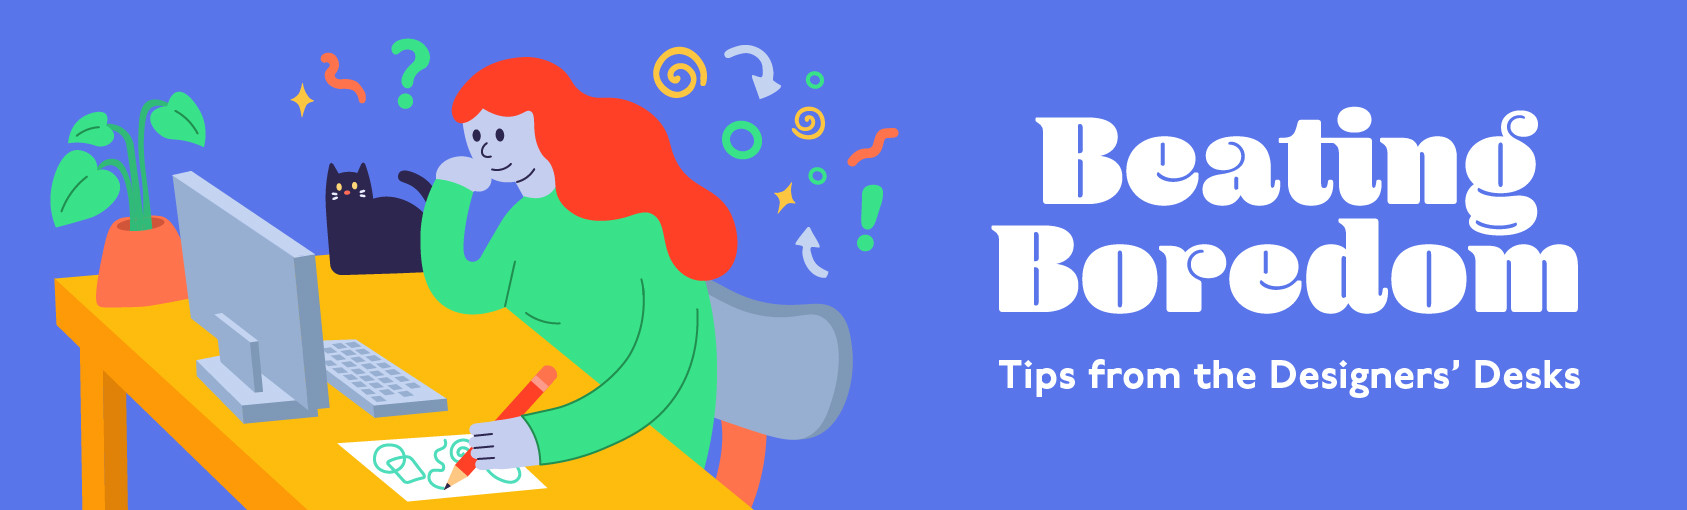 Beating Boredom – Tips from the Designers’ Desks banner